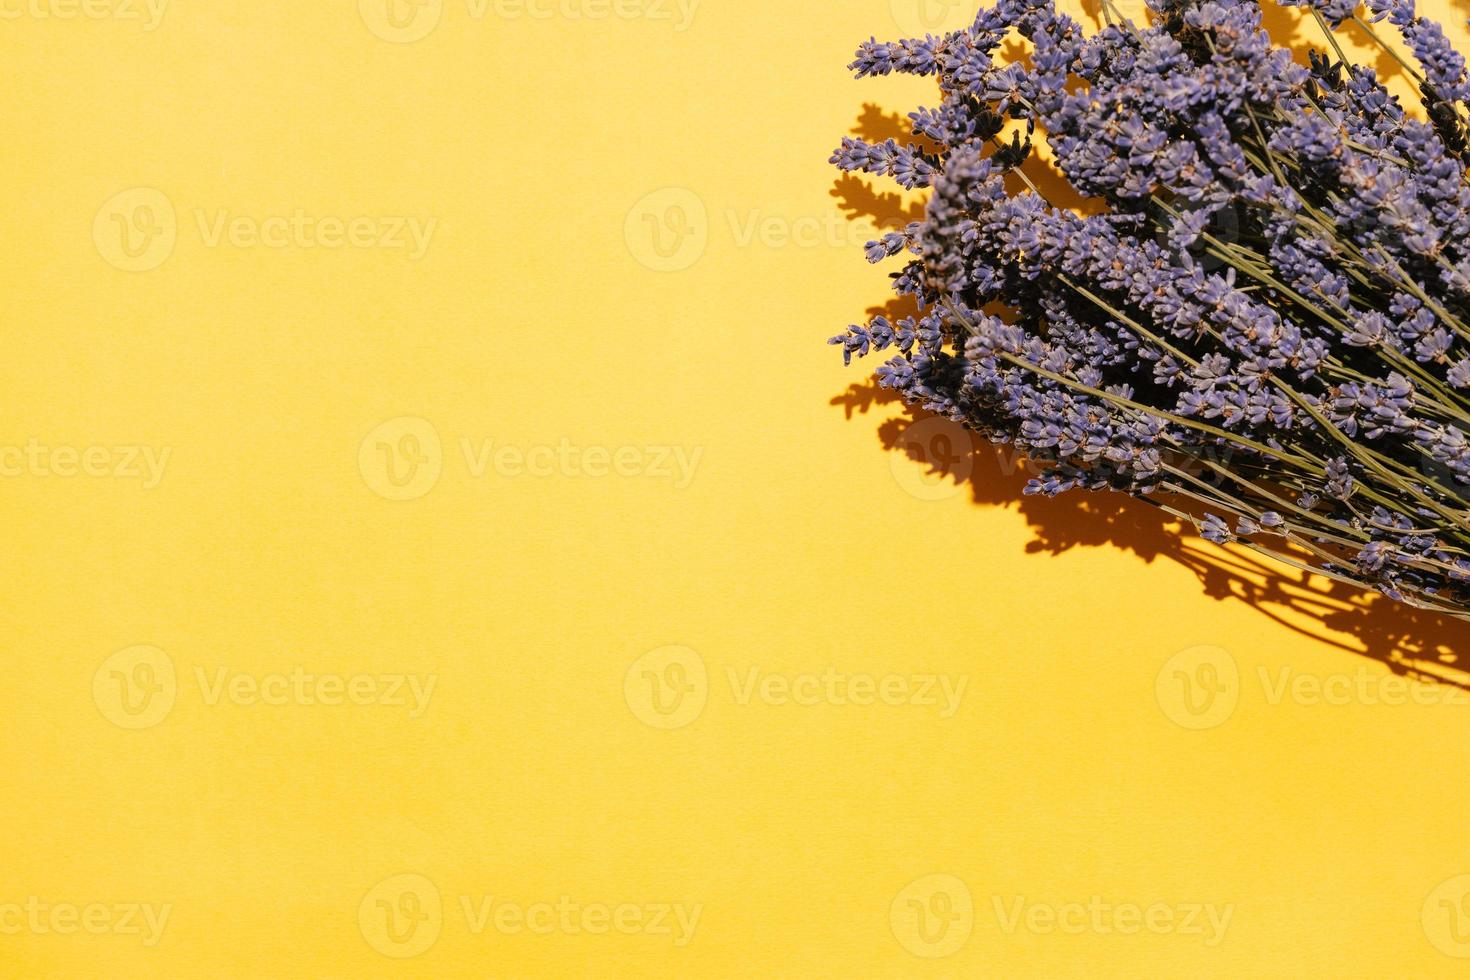 Dry Lavender bundle on yellow background photo